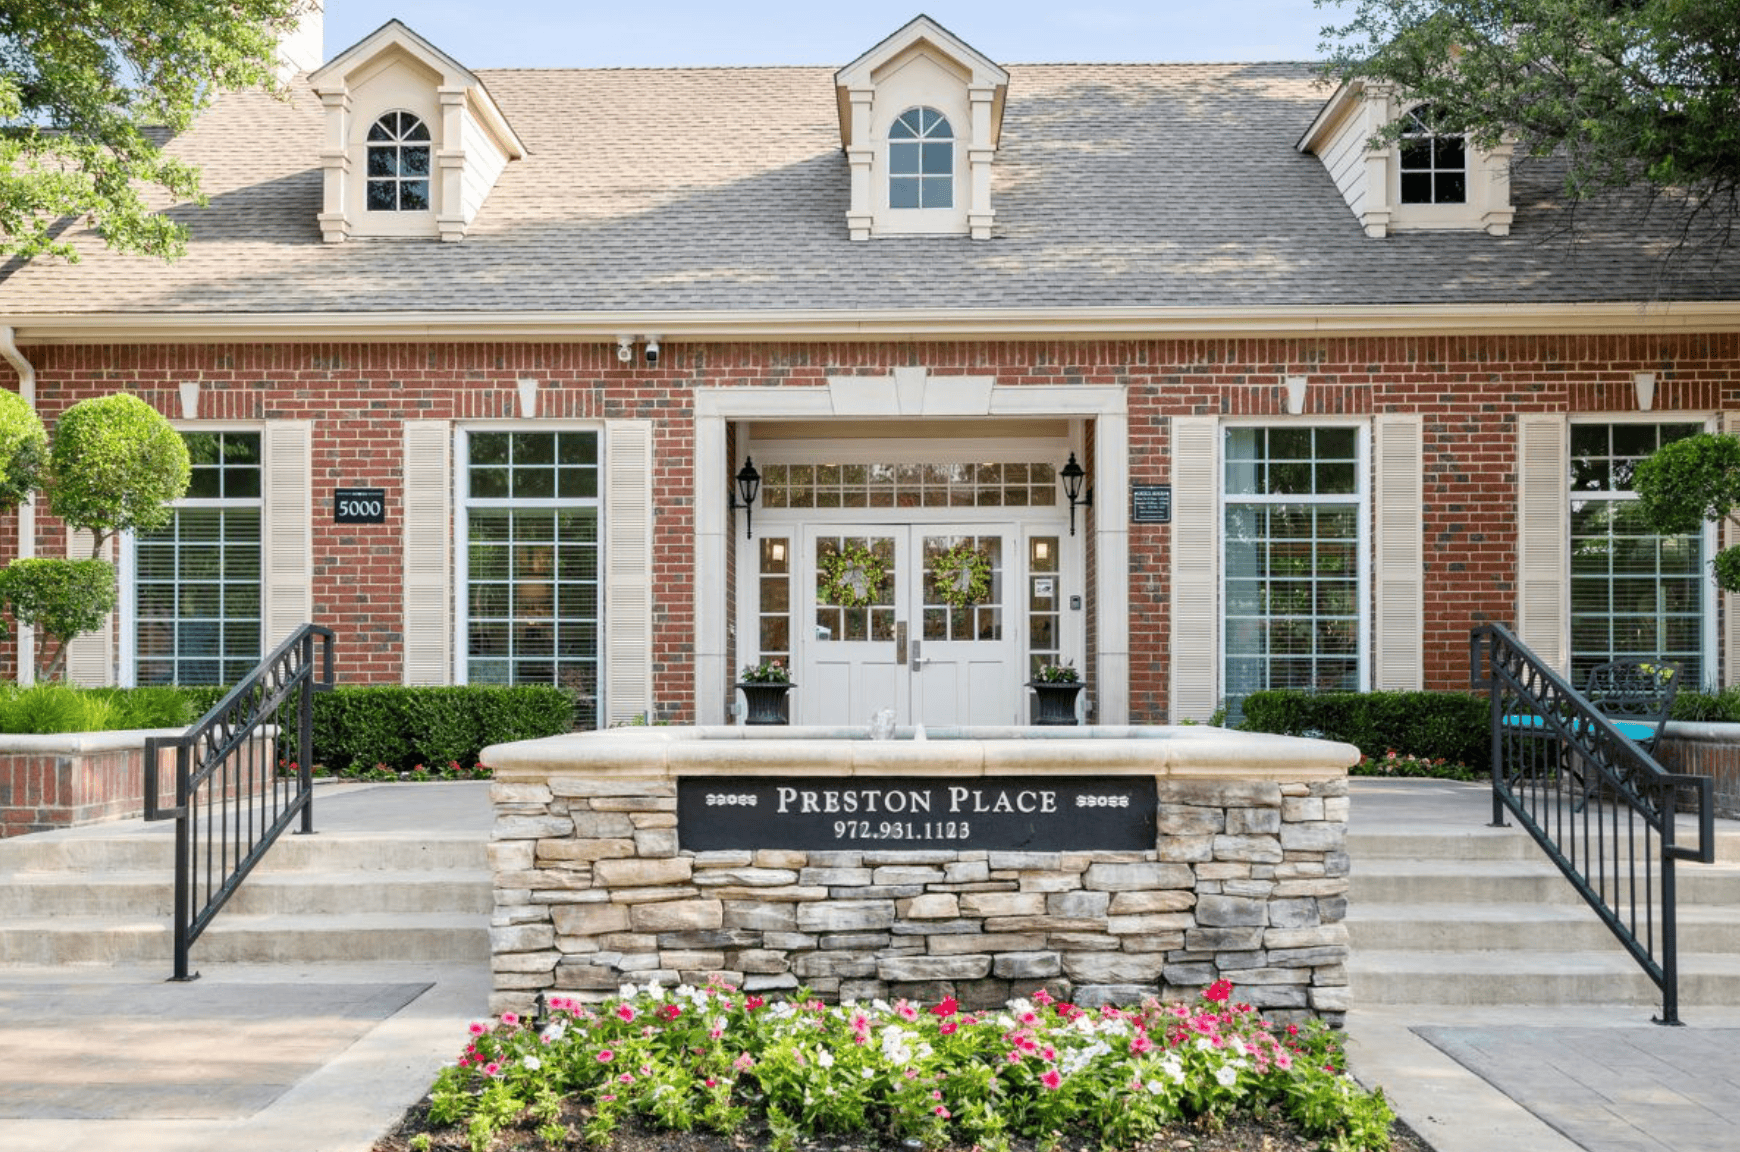 The front entrance at Preston Place Senior Living. Source: True Connection Communities